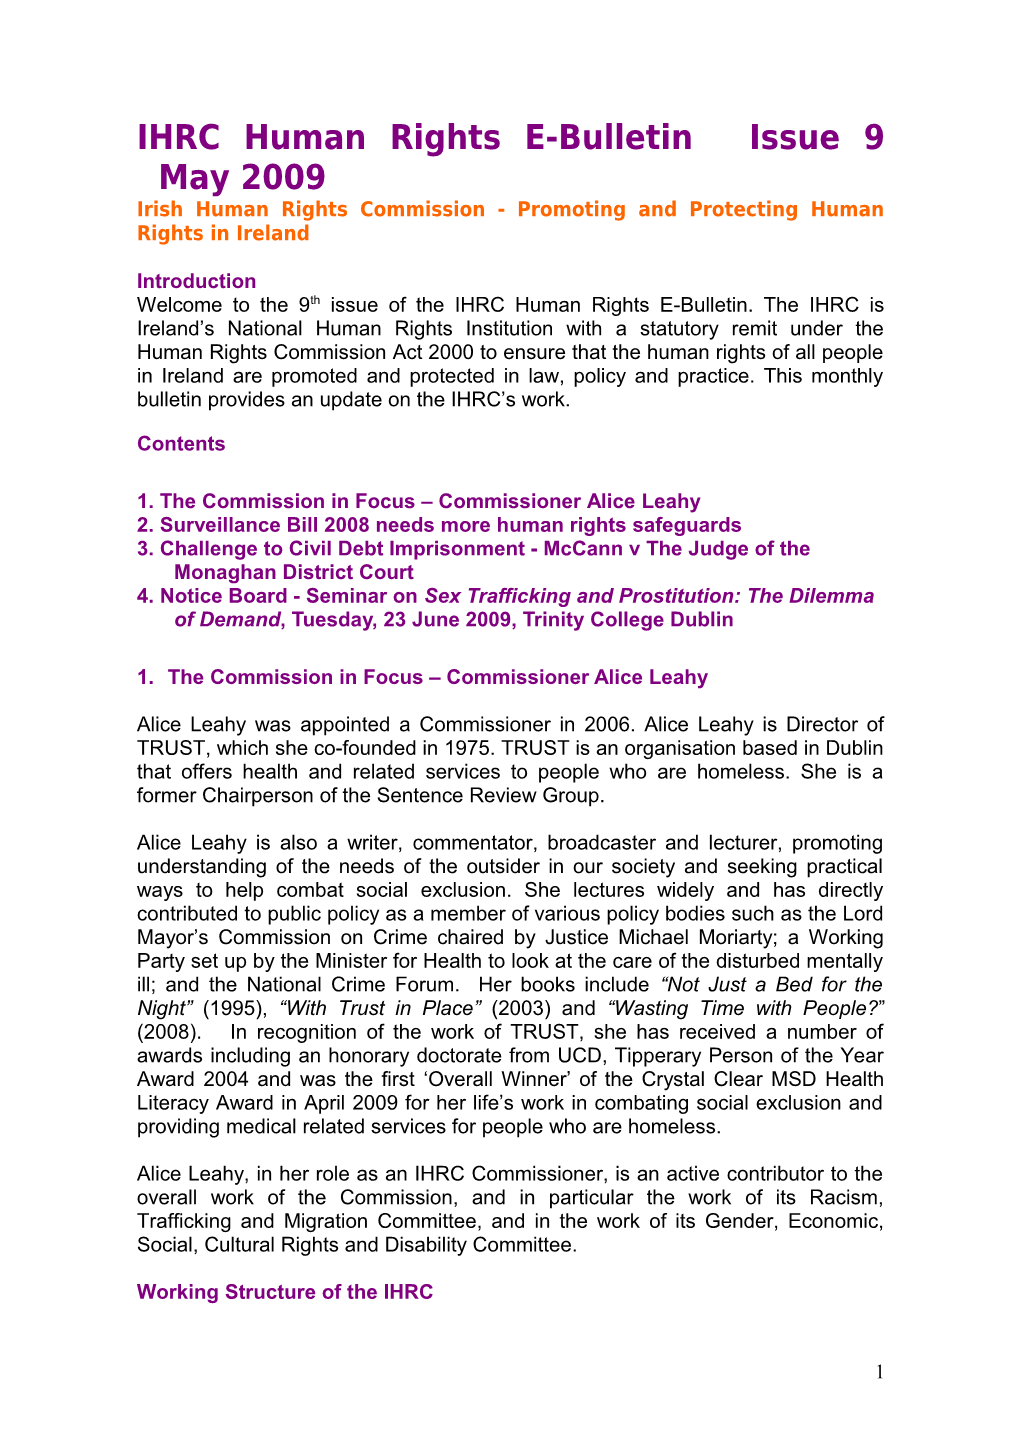 IHRC Human Rights E-Bulletin Issue 8 April 2009